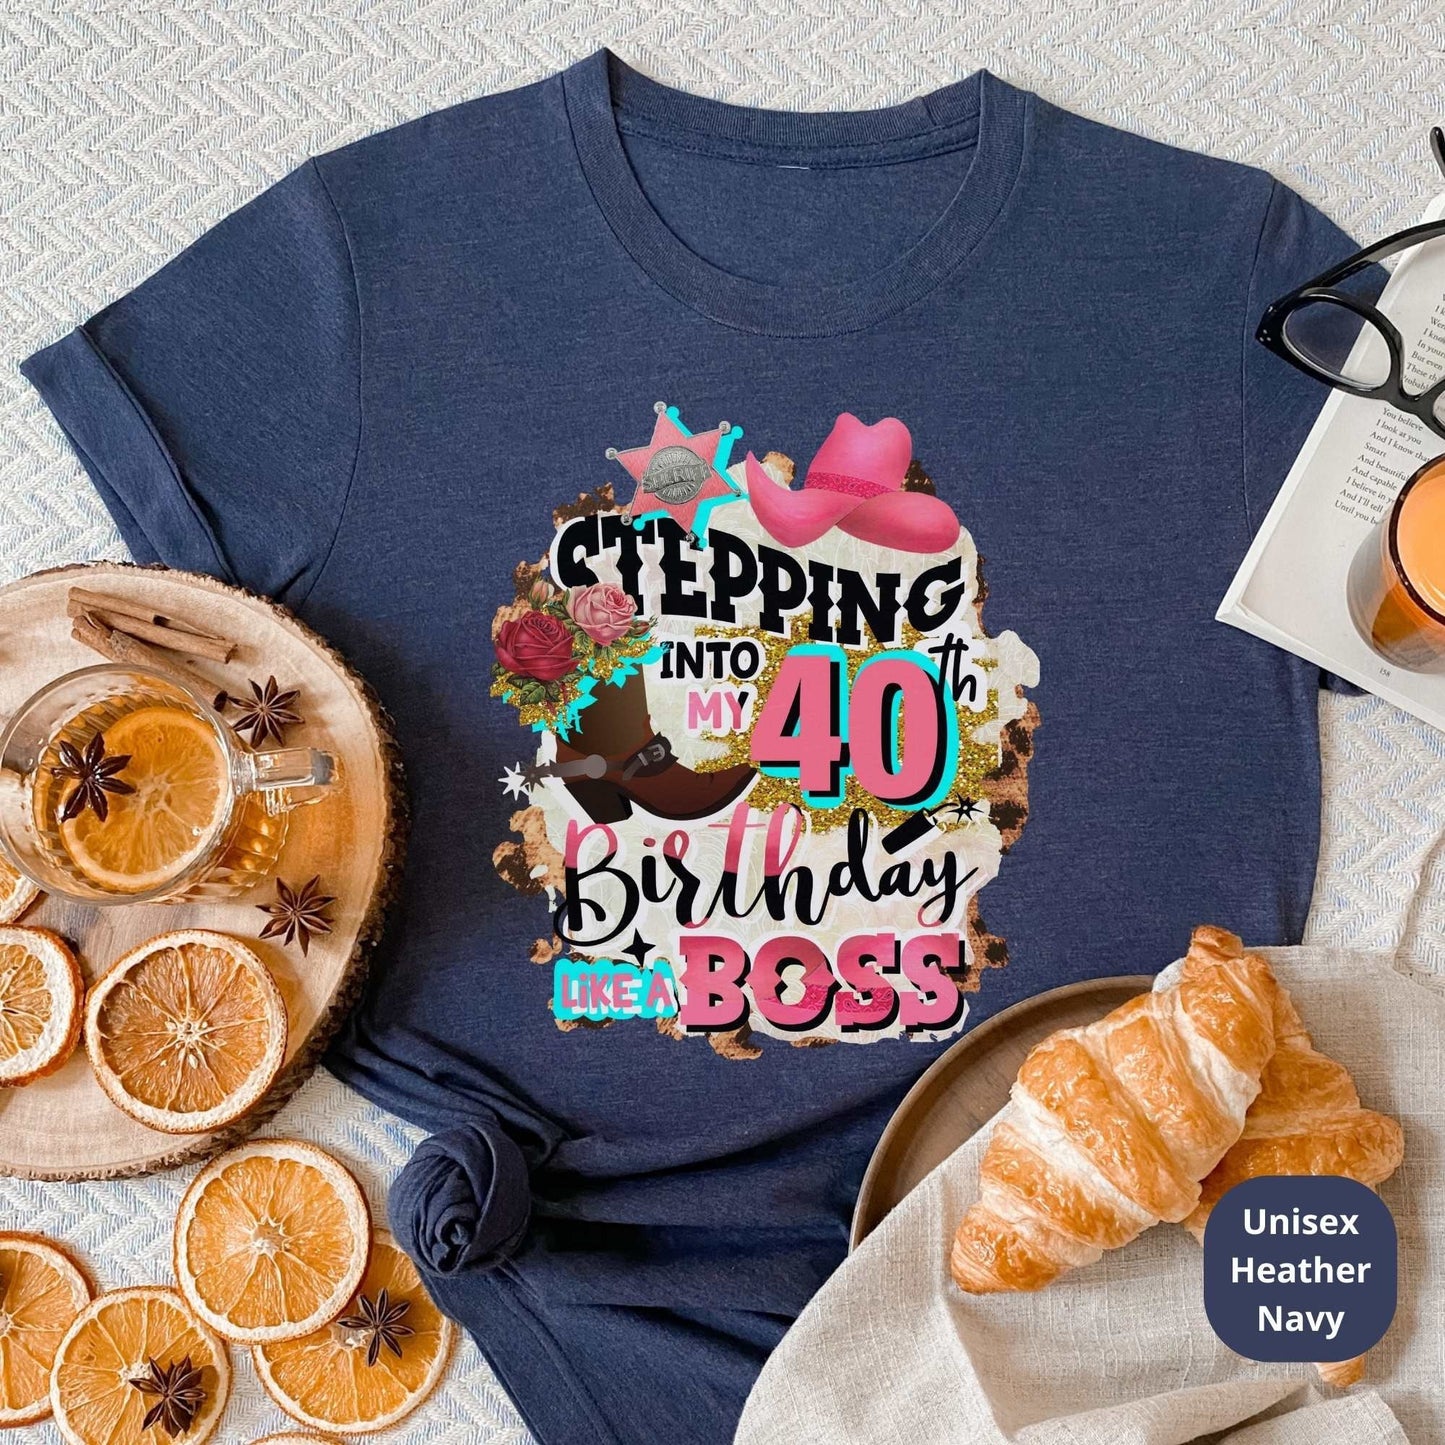 Stepping into 40 Like a Boss, 40th Birthday Shirt, 40th Birthday Gift HMDesignStudioUS